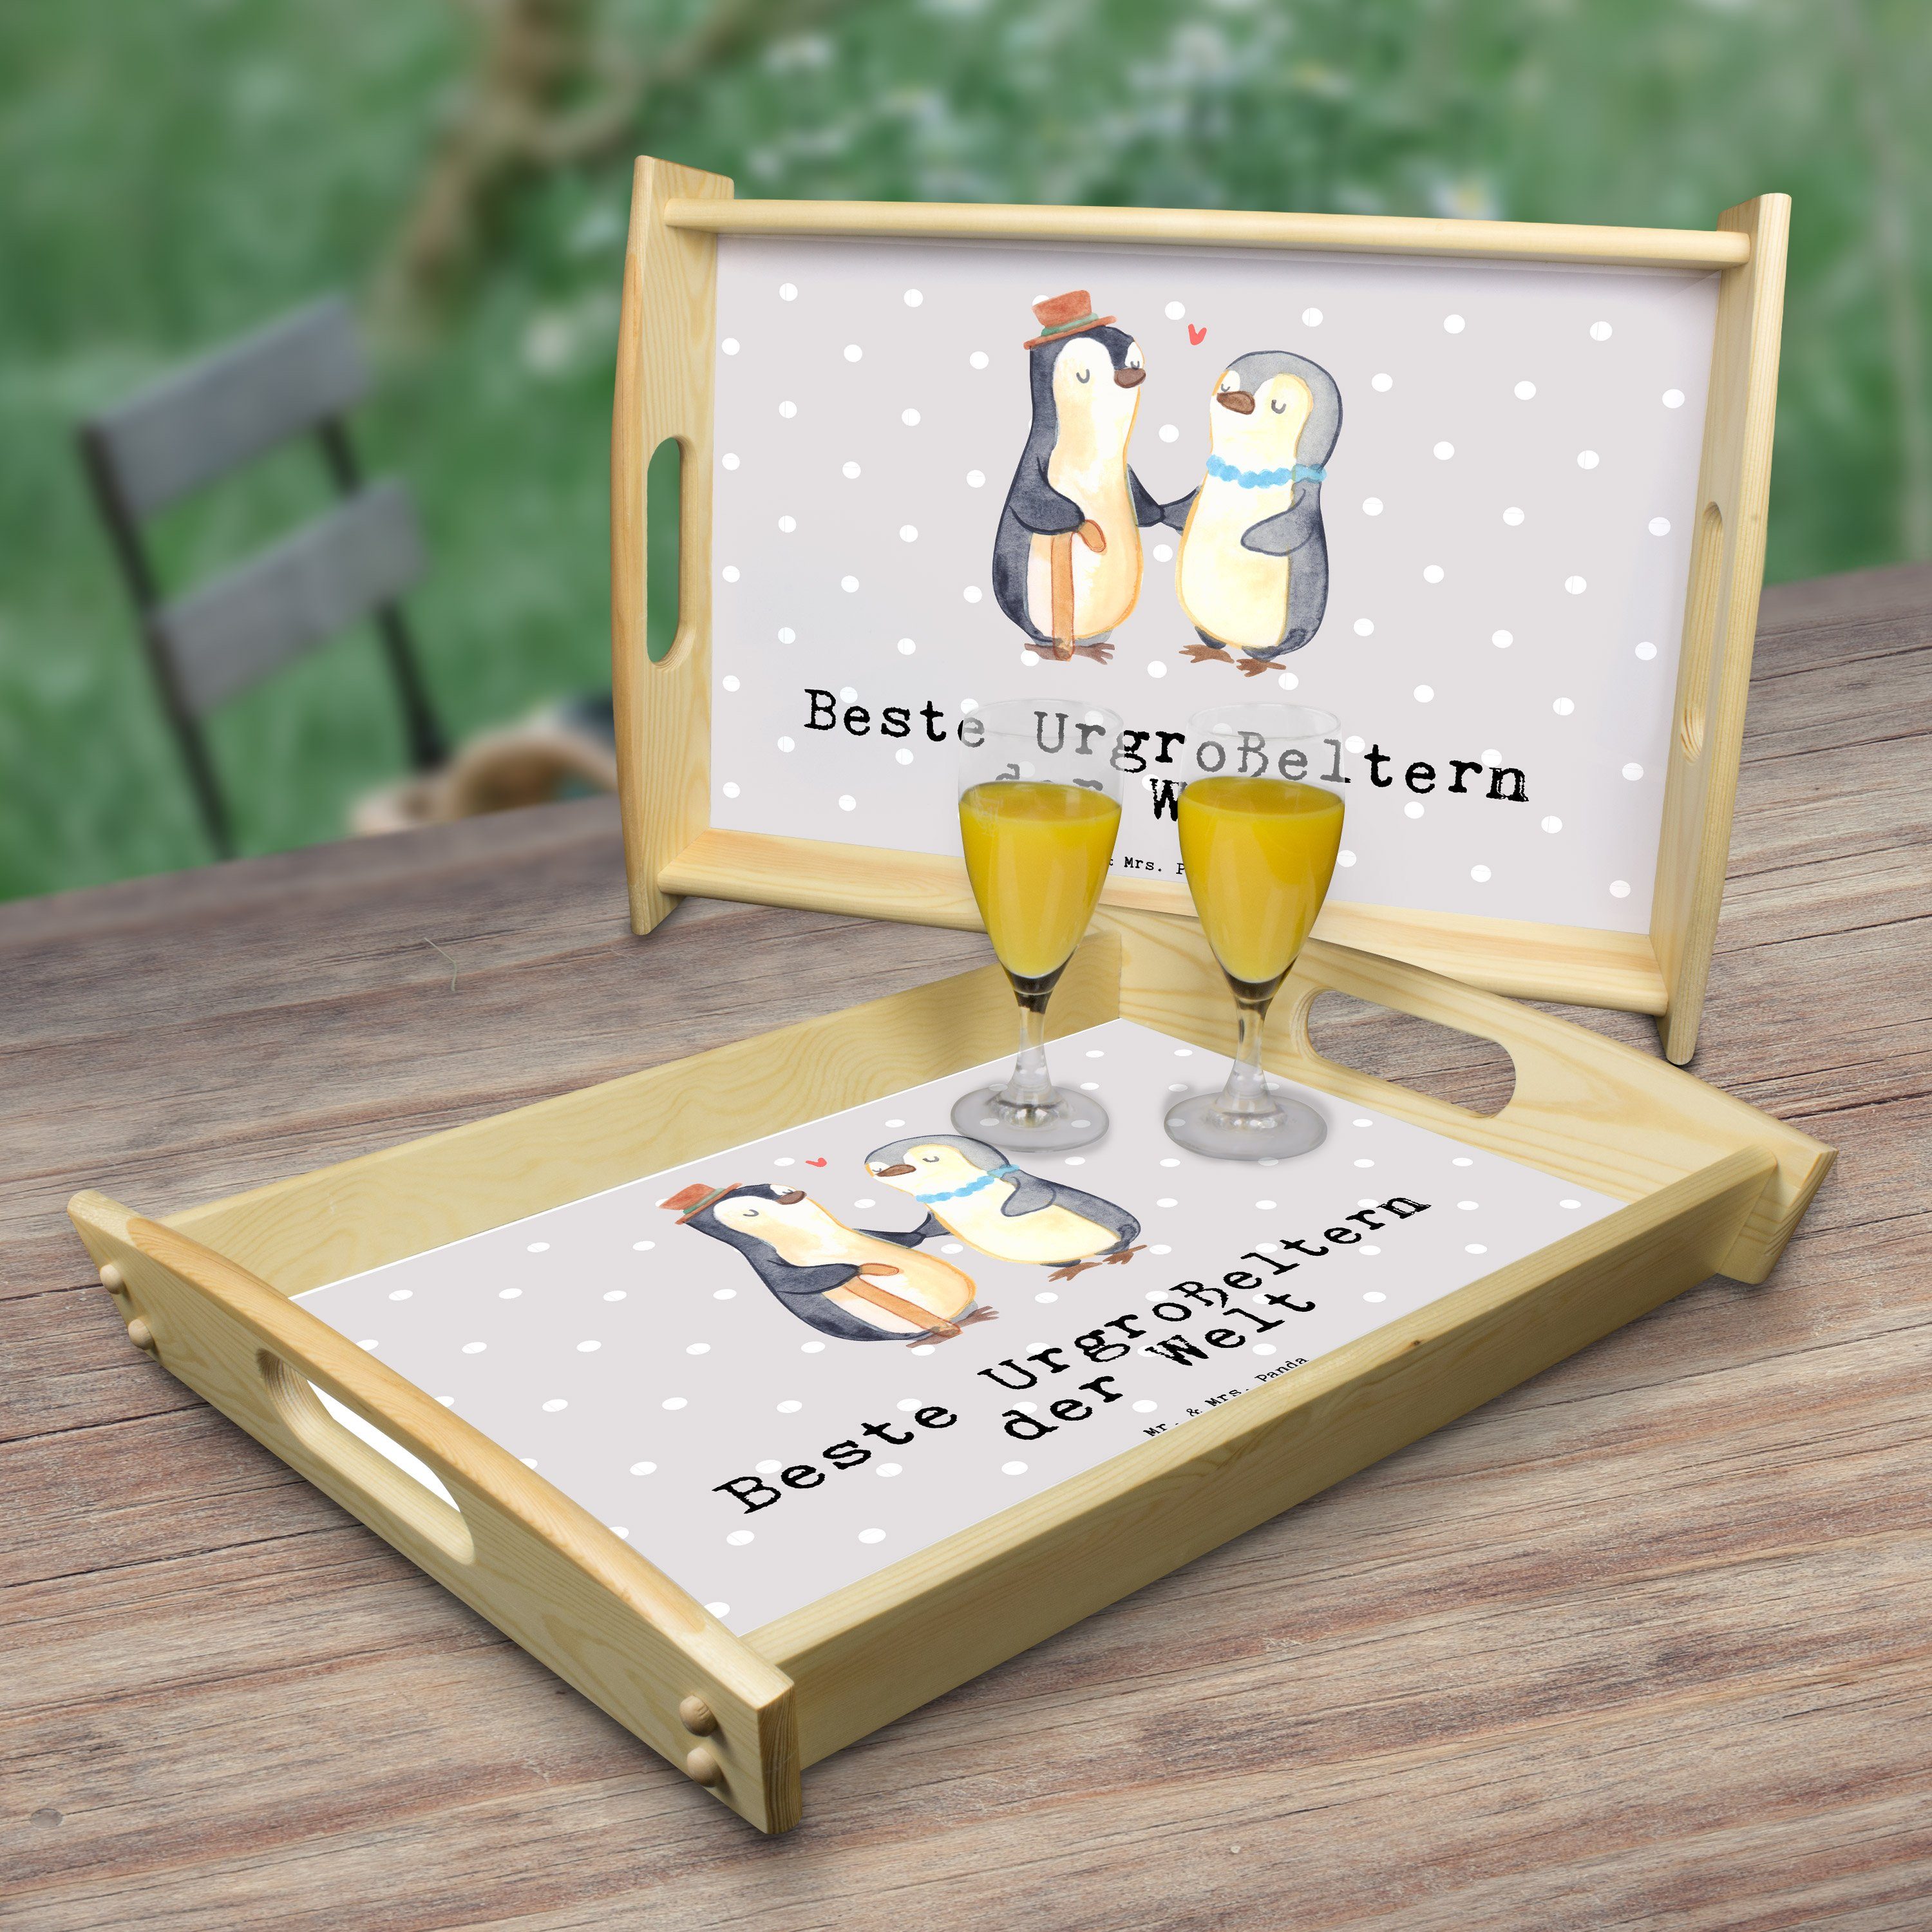 Mr. & Mrs. Panda Tablett (1-tlg) Echtholz - Pinguin lasiert, Grau Bedank, Urgroßeltern Geschenk, Beste - der Pastell Welt